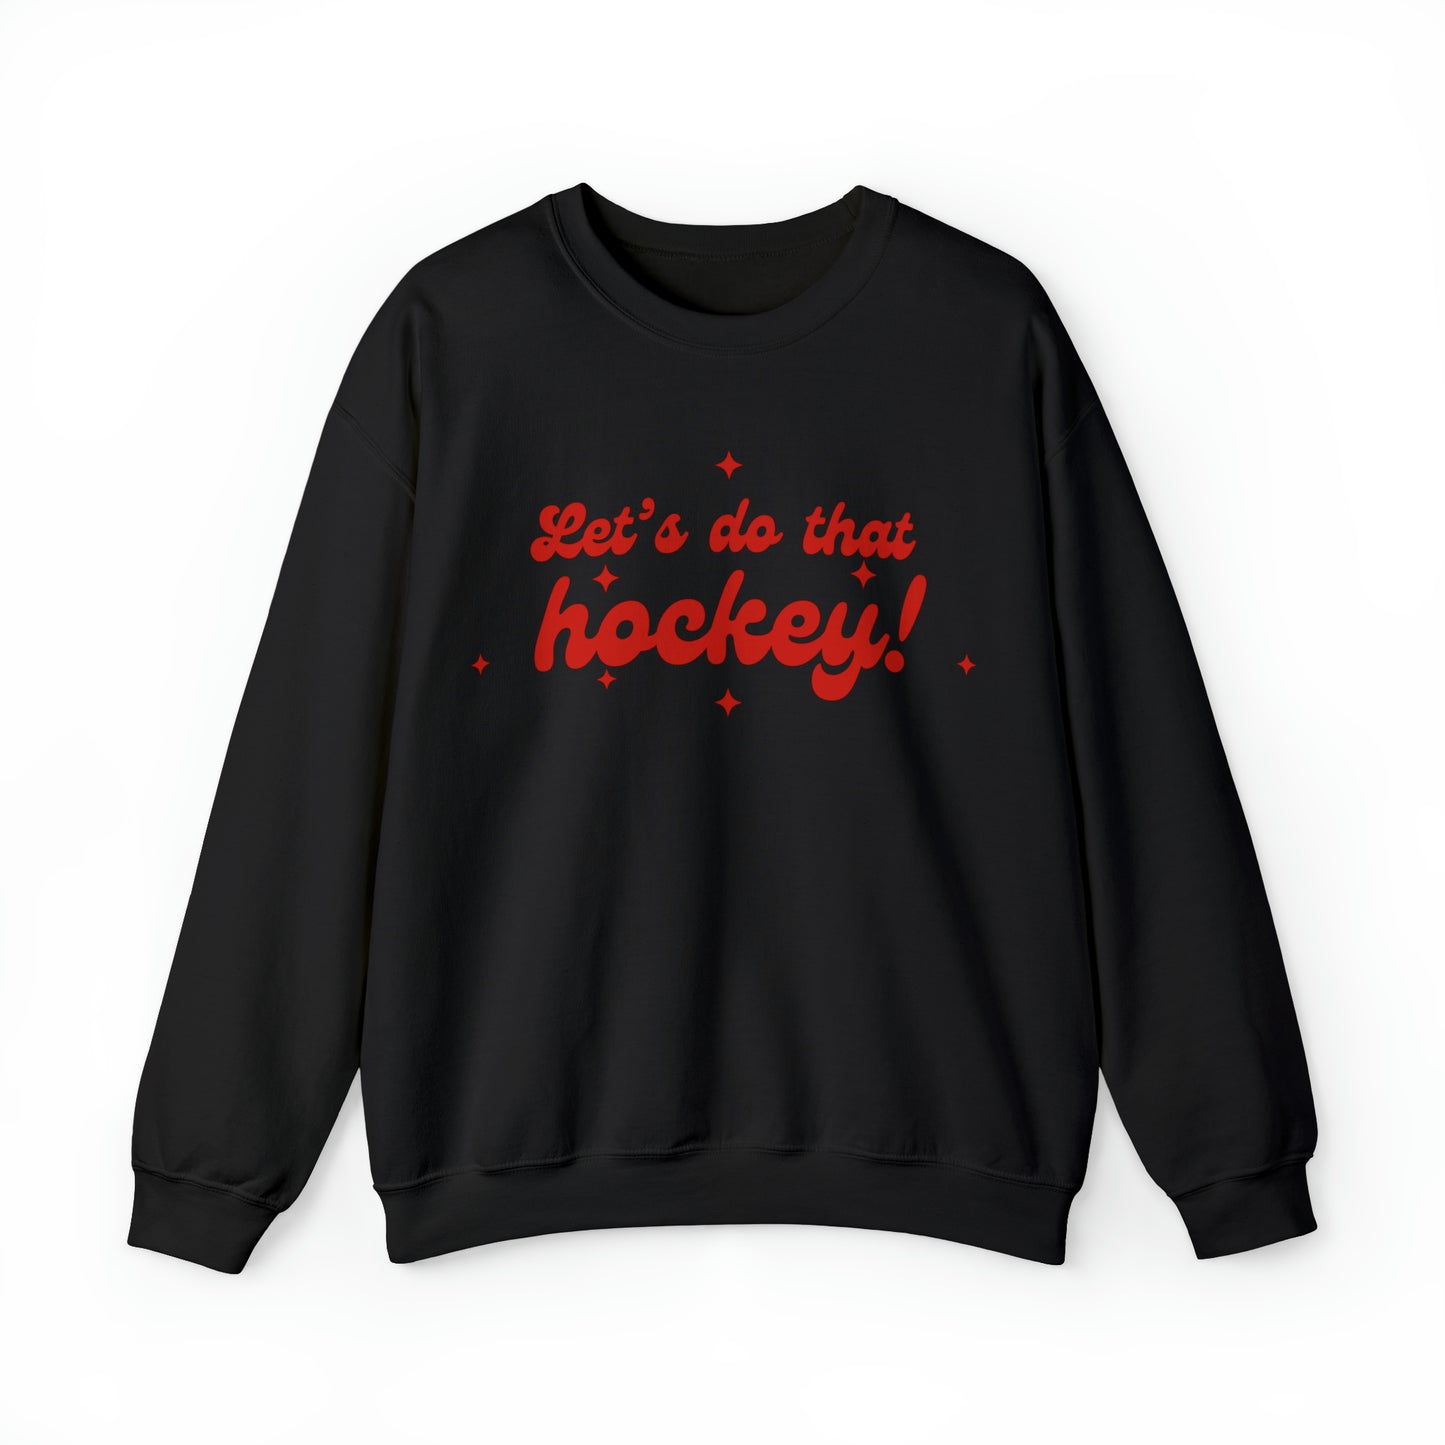 Let's do that hockey! Unisex Crewneck Sweatshirt